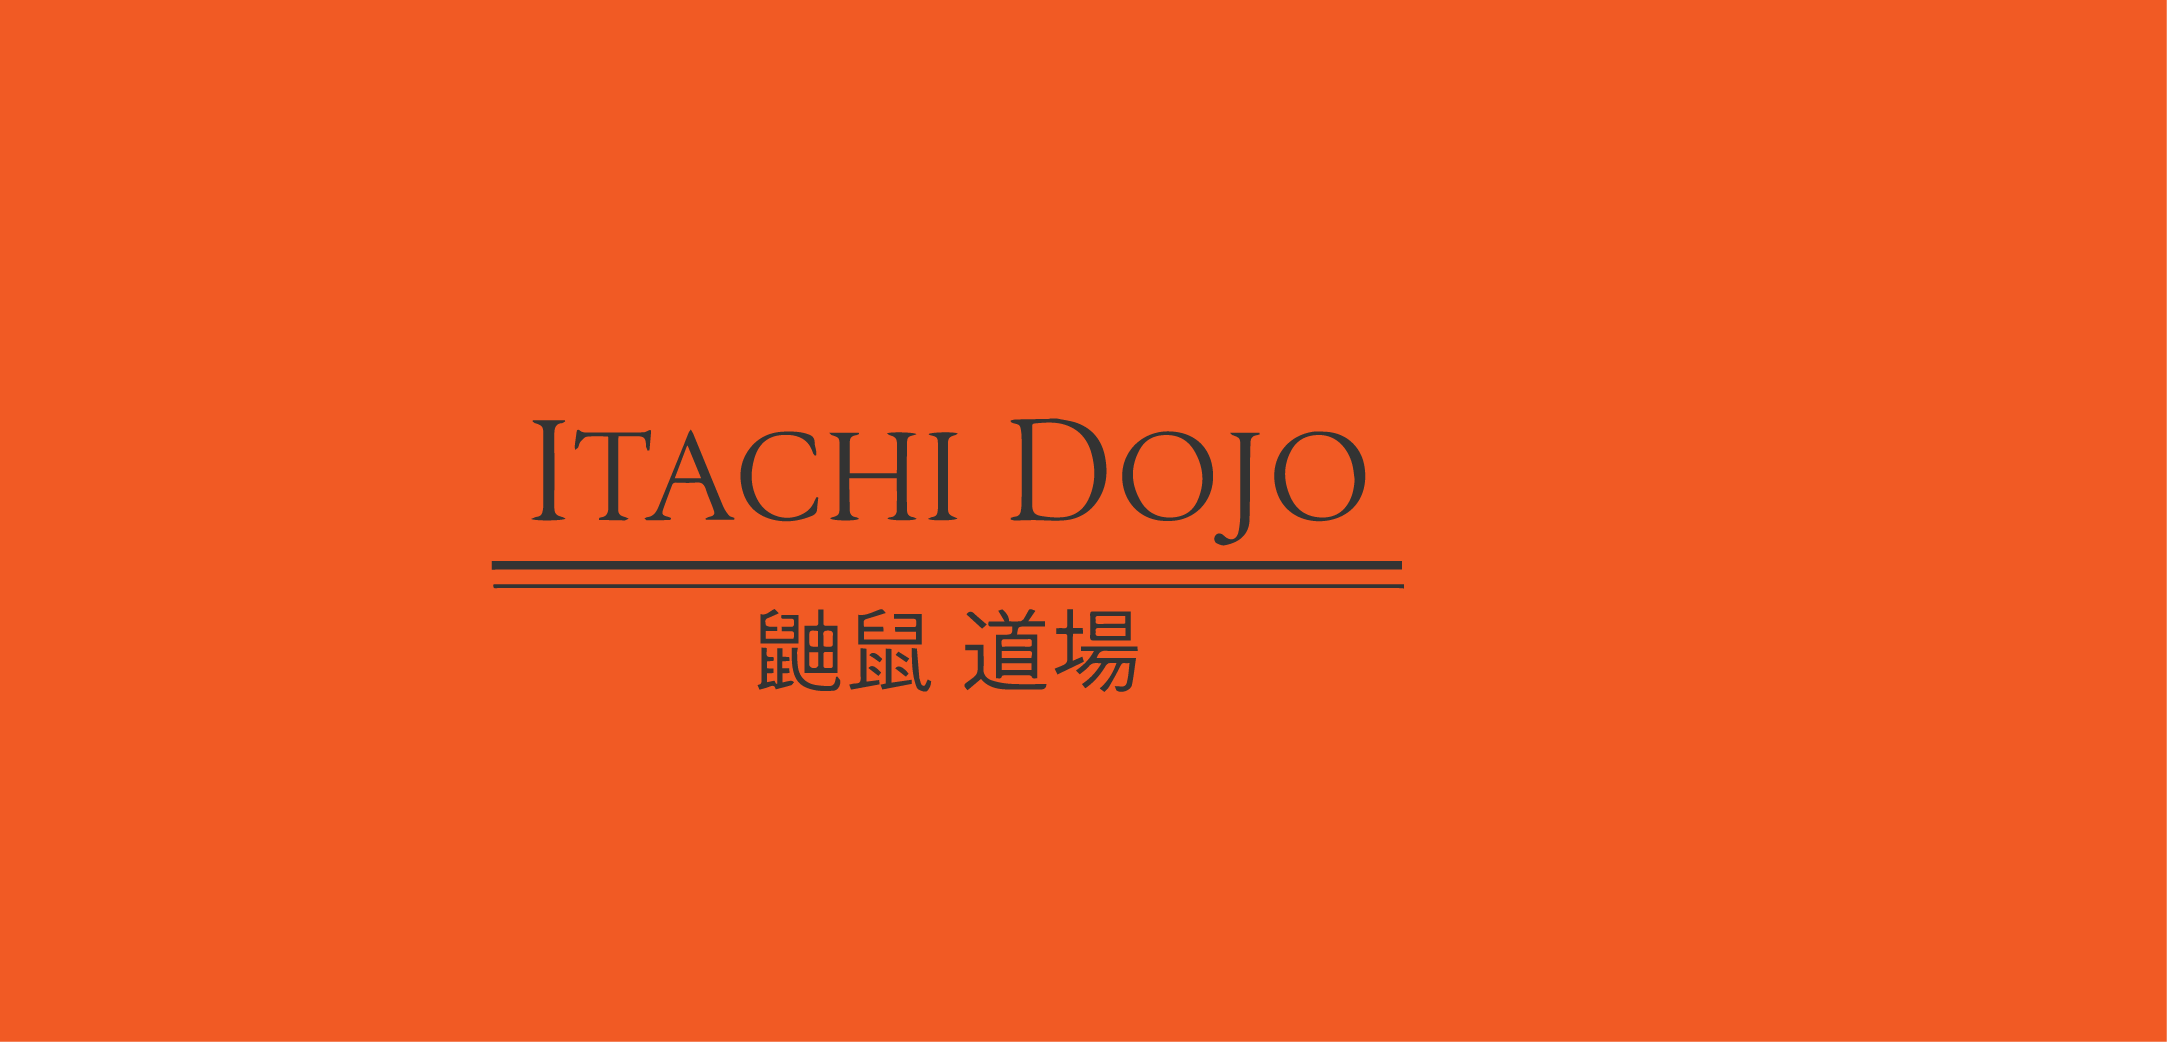 Webshop Itachi Dojo